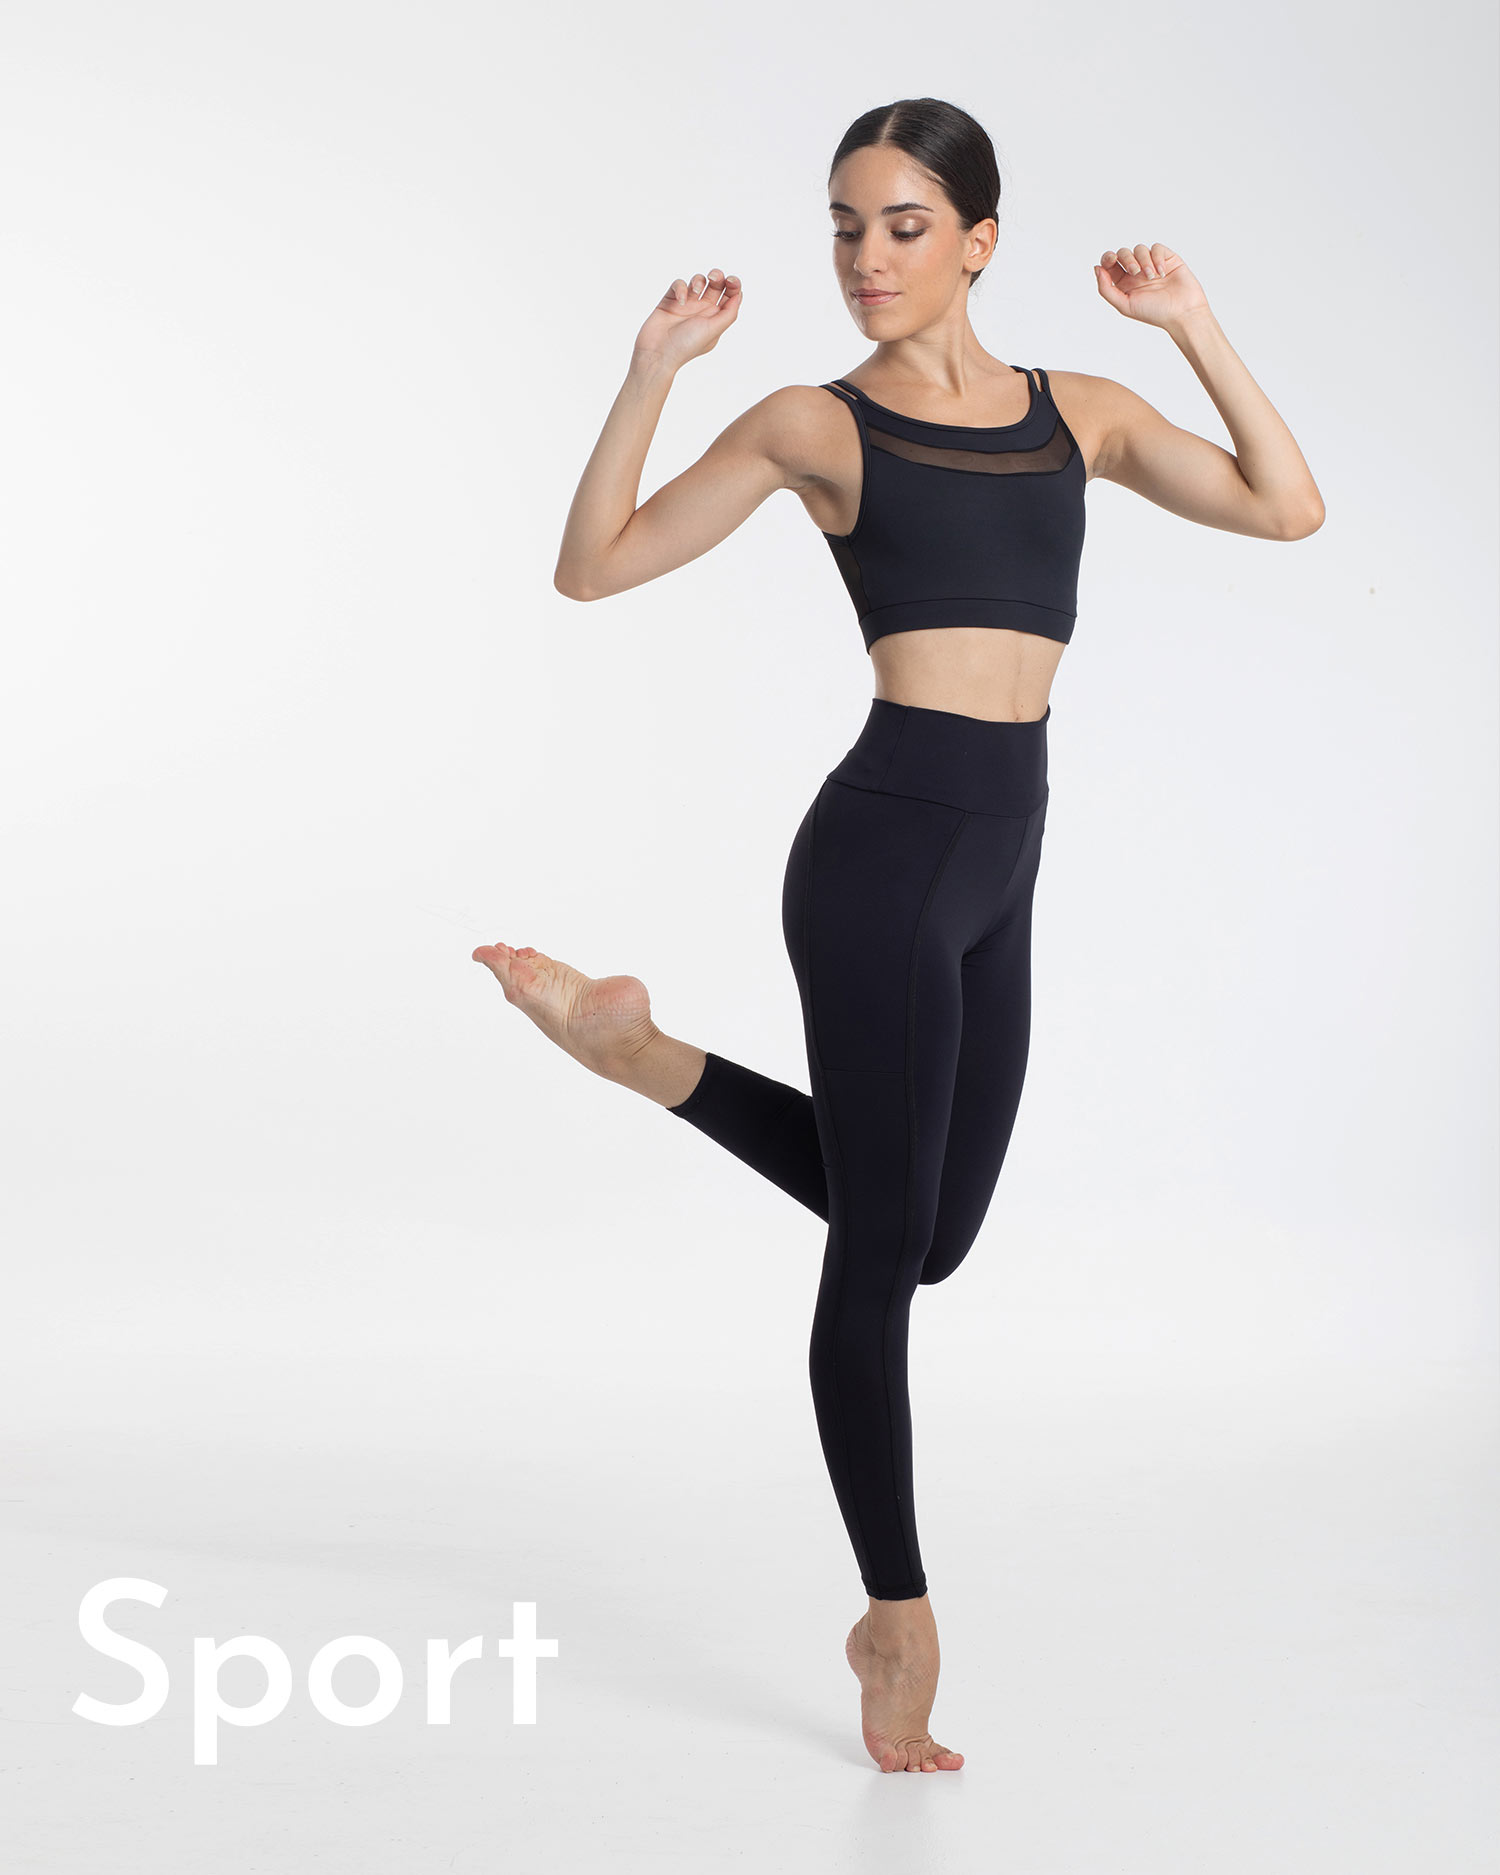 tops y leggings de sport para pilates yoga danza jazz moderno urban contemporáneo